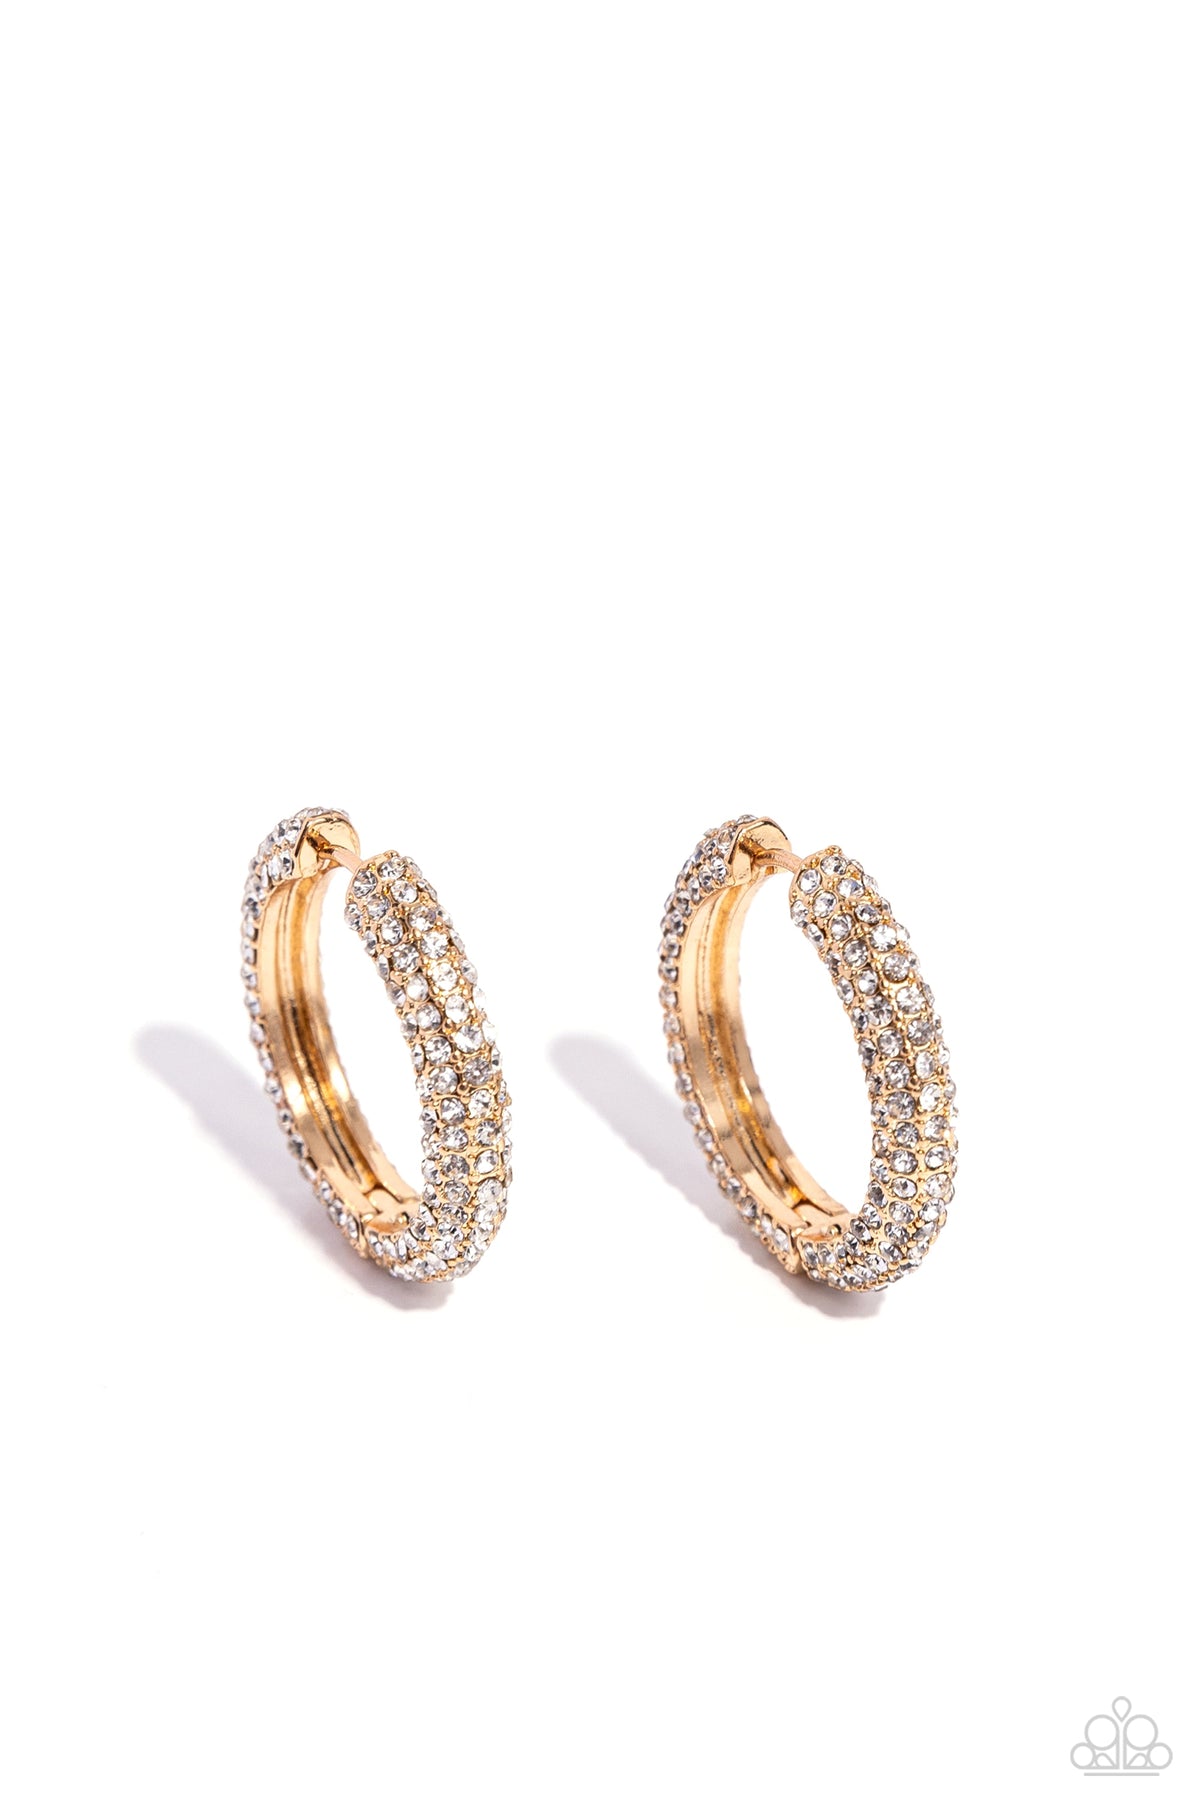 Glowing Praise Gold &amp; White Rhinestone Hoop Earrings - Paparazzi Accessories- lightbox - CarasShop.com - $5 Jewelry by Cara Jewels